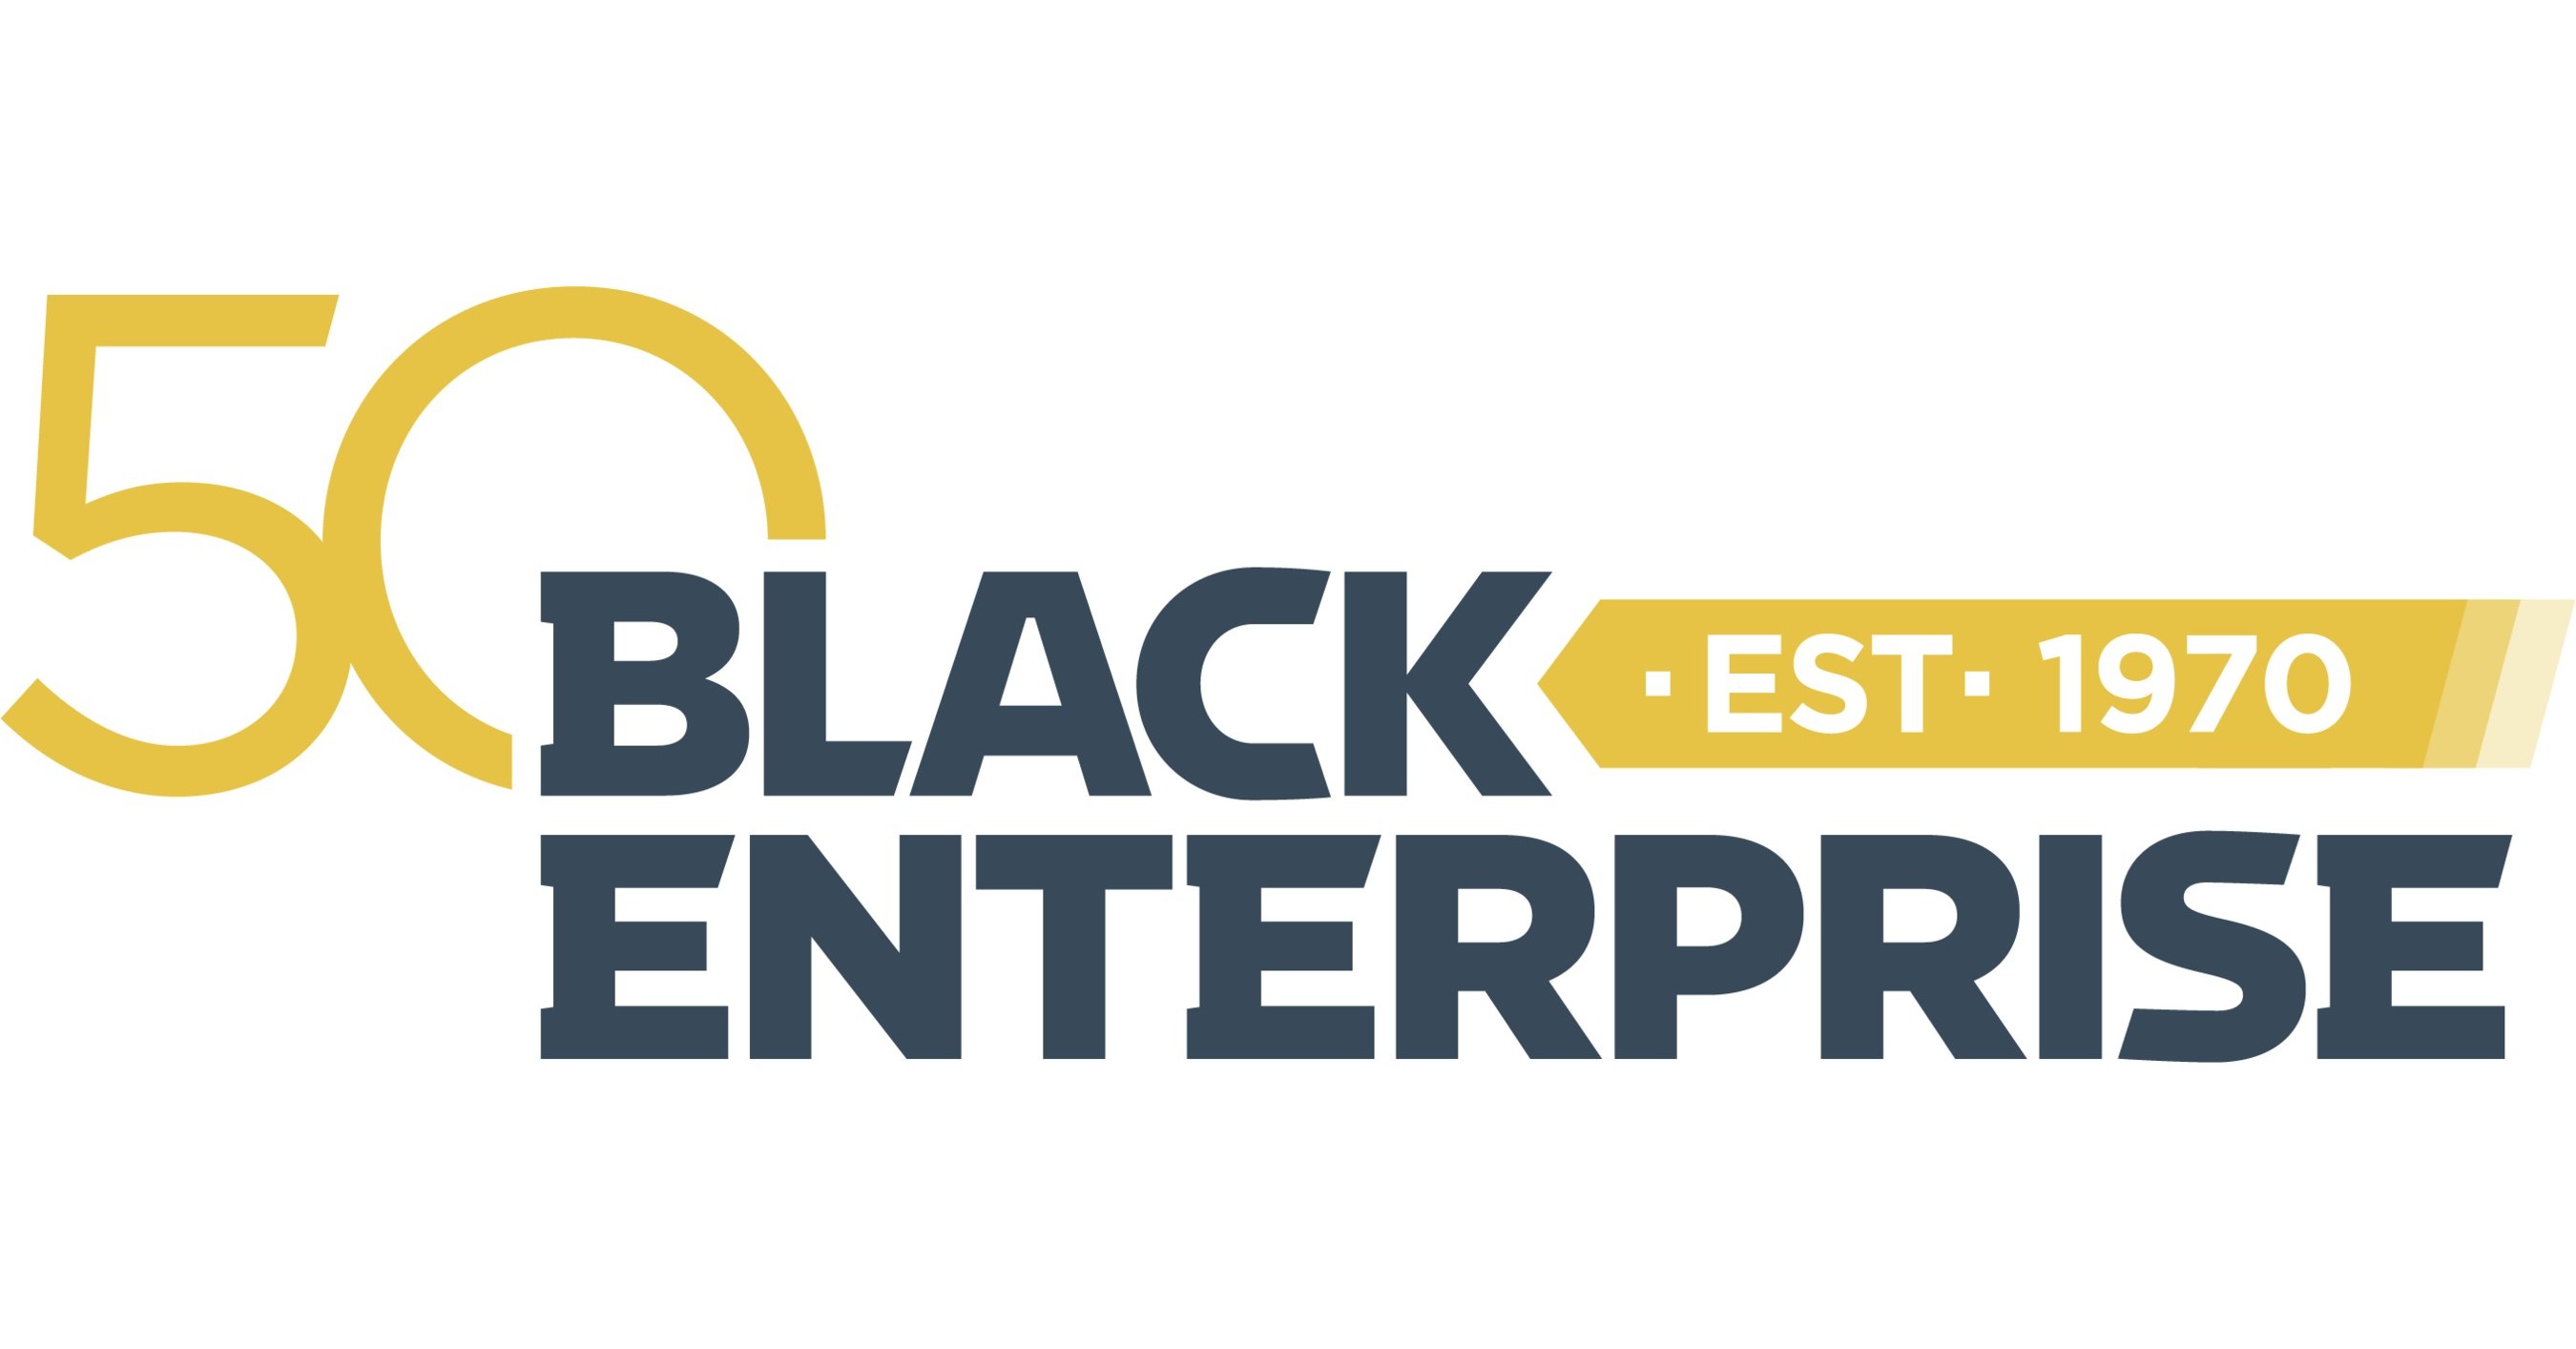 BLACK ENTERPRISE Presented Virtual Summit Focused On Closing The Racial Wealth Gap And Building Multigenerational Wealth In Black Communities, April 22